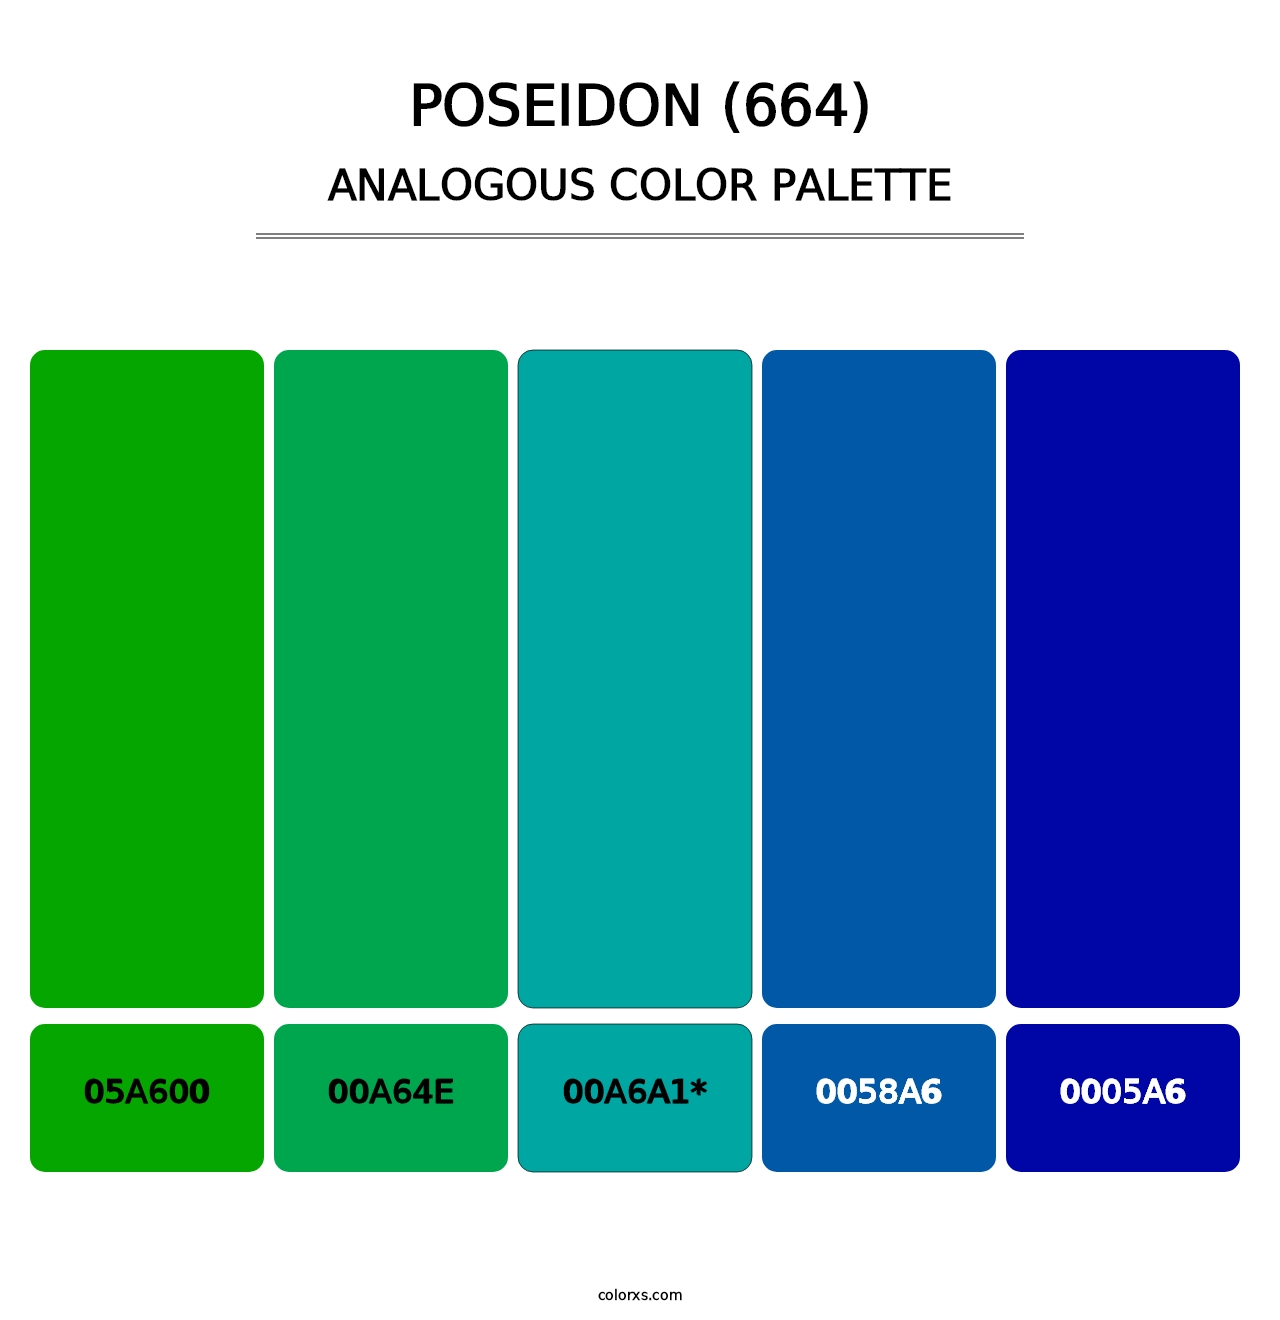 Poseidon (664) - Analogous Color Palette